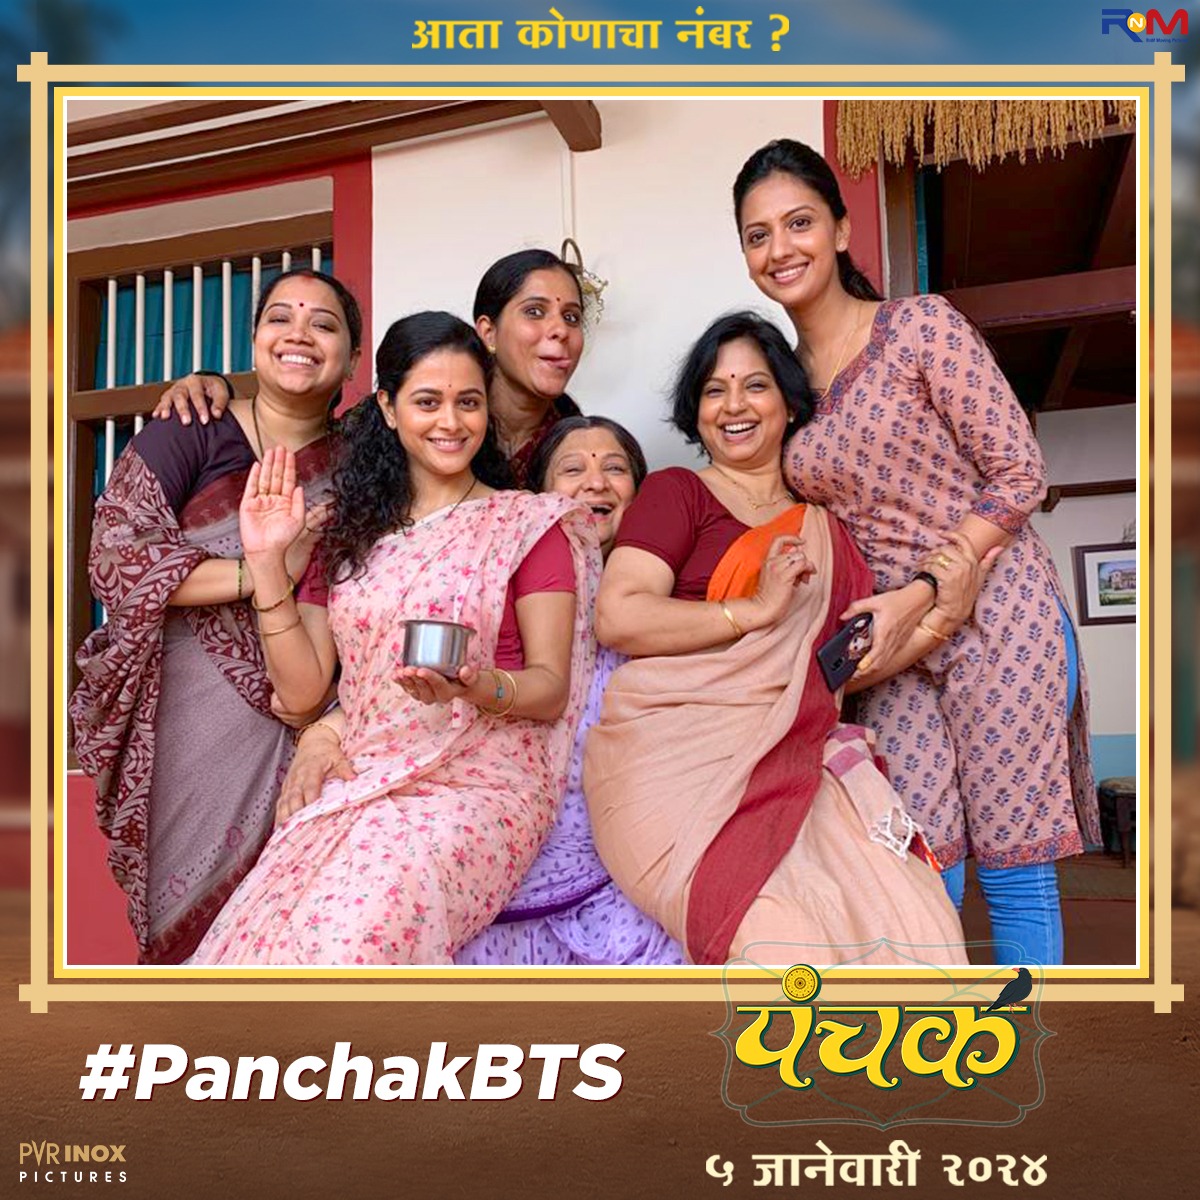 पंचकची Women Power!
५ जानेवारीपासून थिएटर्समध्ये लागणार हास्याचा 'पंचक.'
@panchakthefilm #PanchakOn5Jan
@MadhuriDixit @DoctorNene @MovingRnm
#Rahulawate #JayantJathar #NitinVaidyaProductions
@adinathkothare @BharatiAchrekar #DilipPrabhavalkar